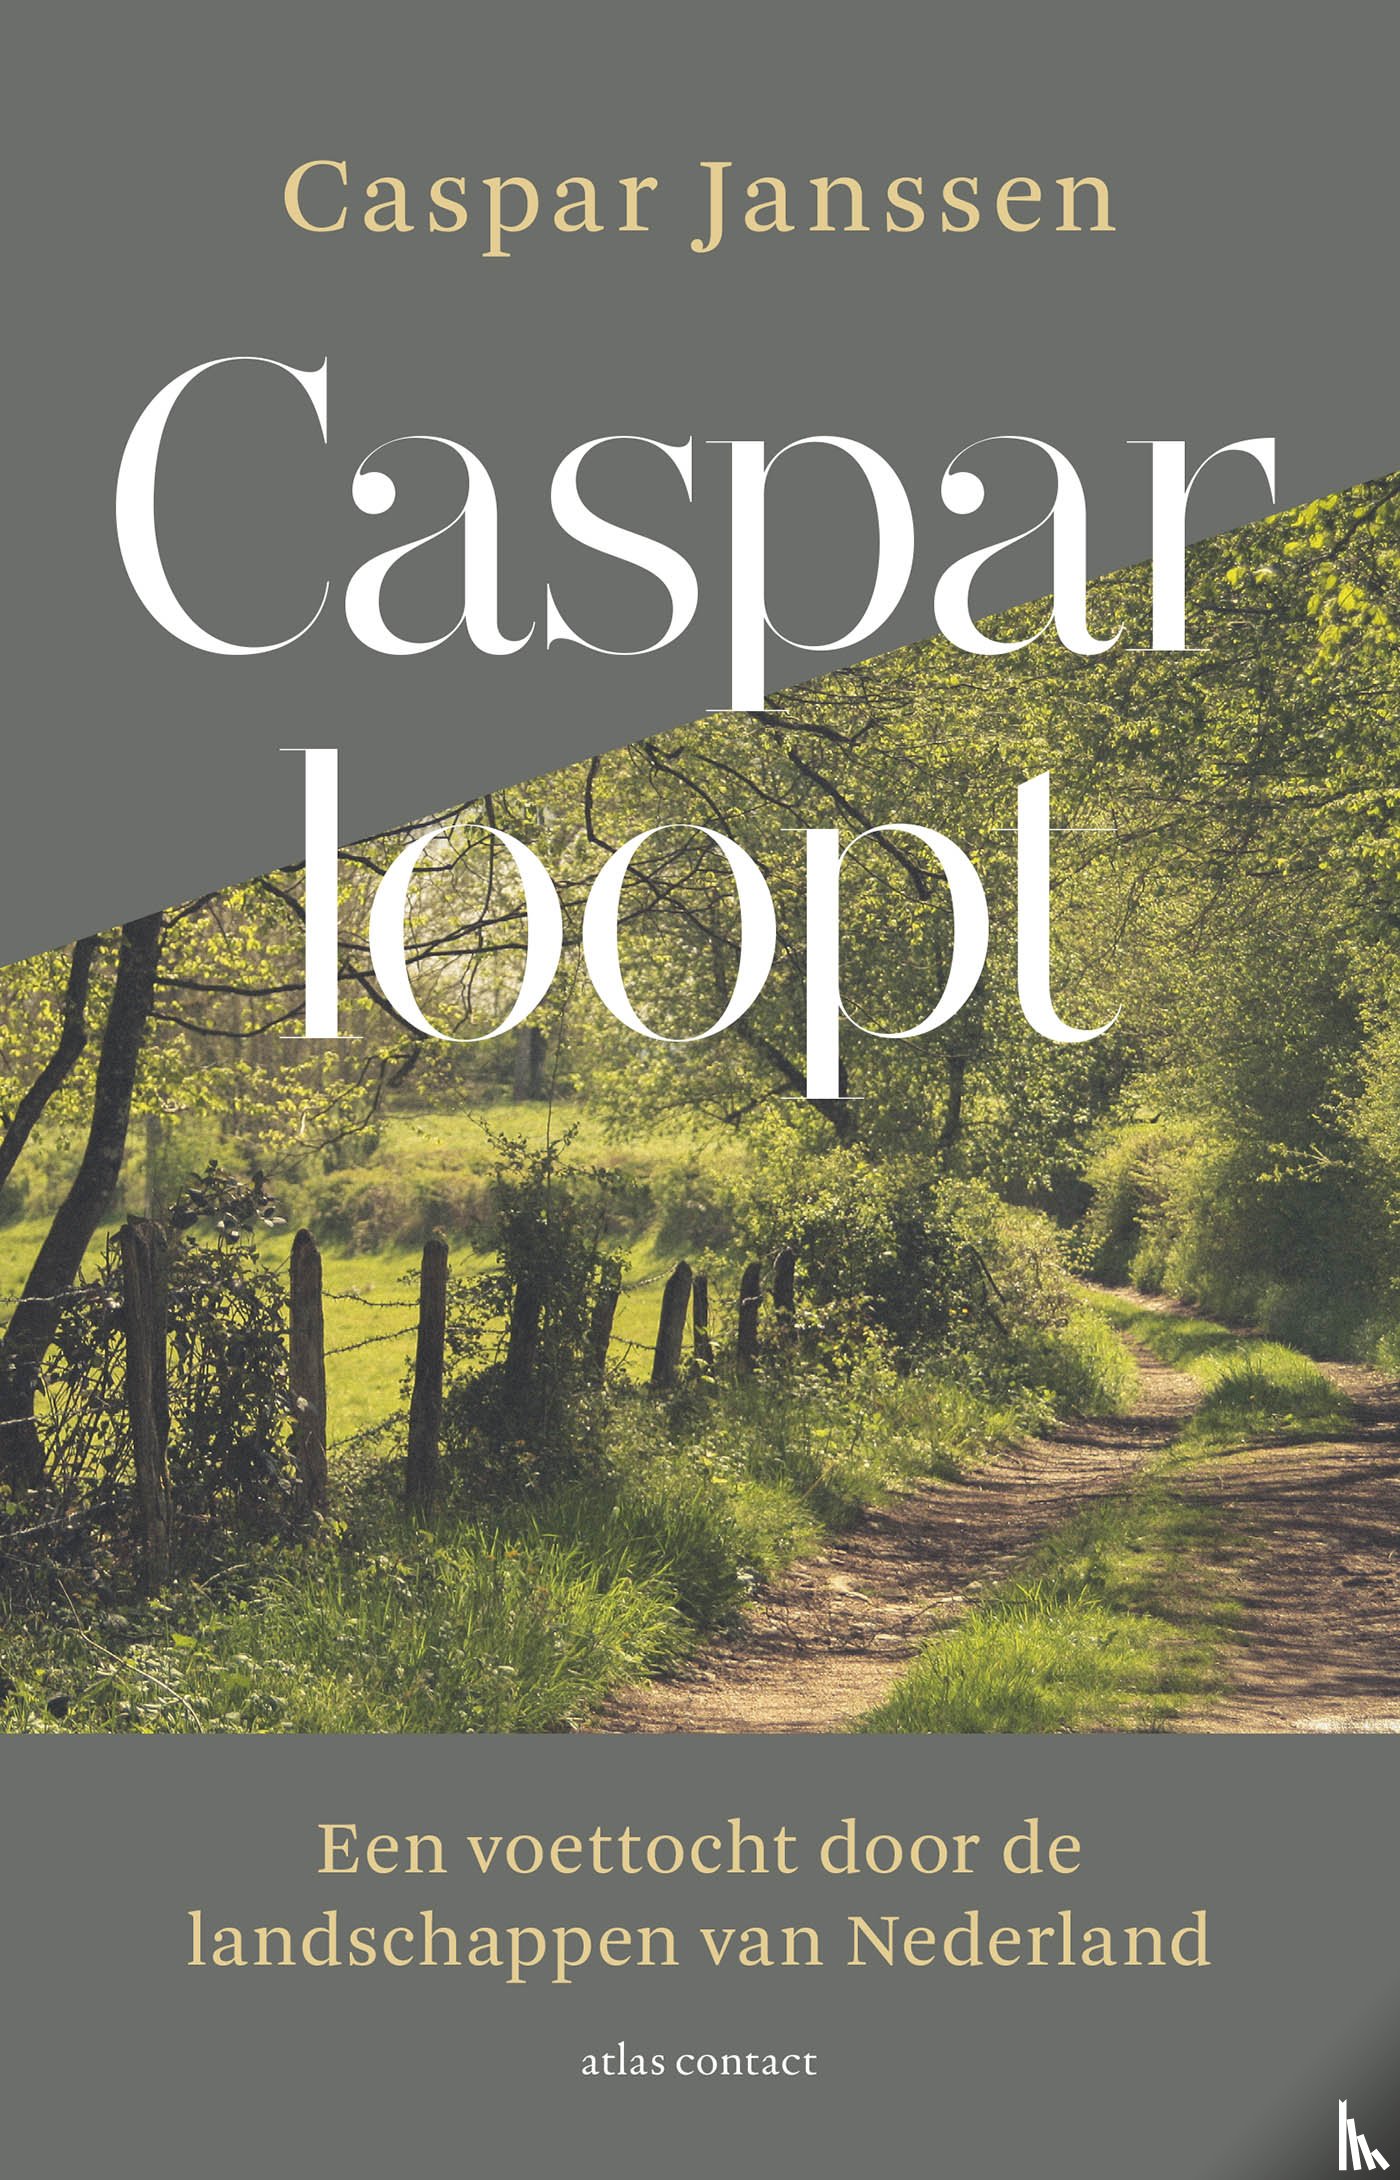 Janssen, Caspar - Caspar loopt